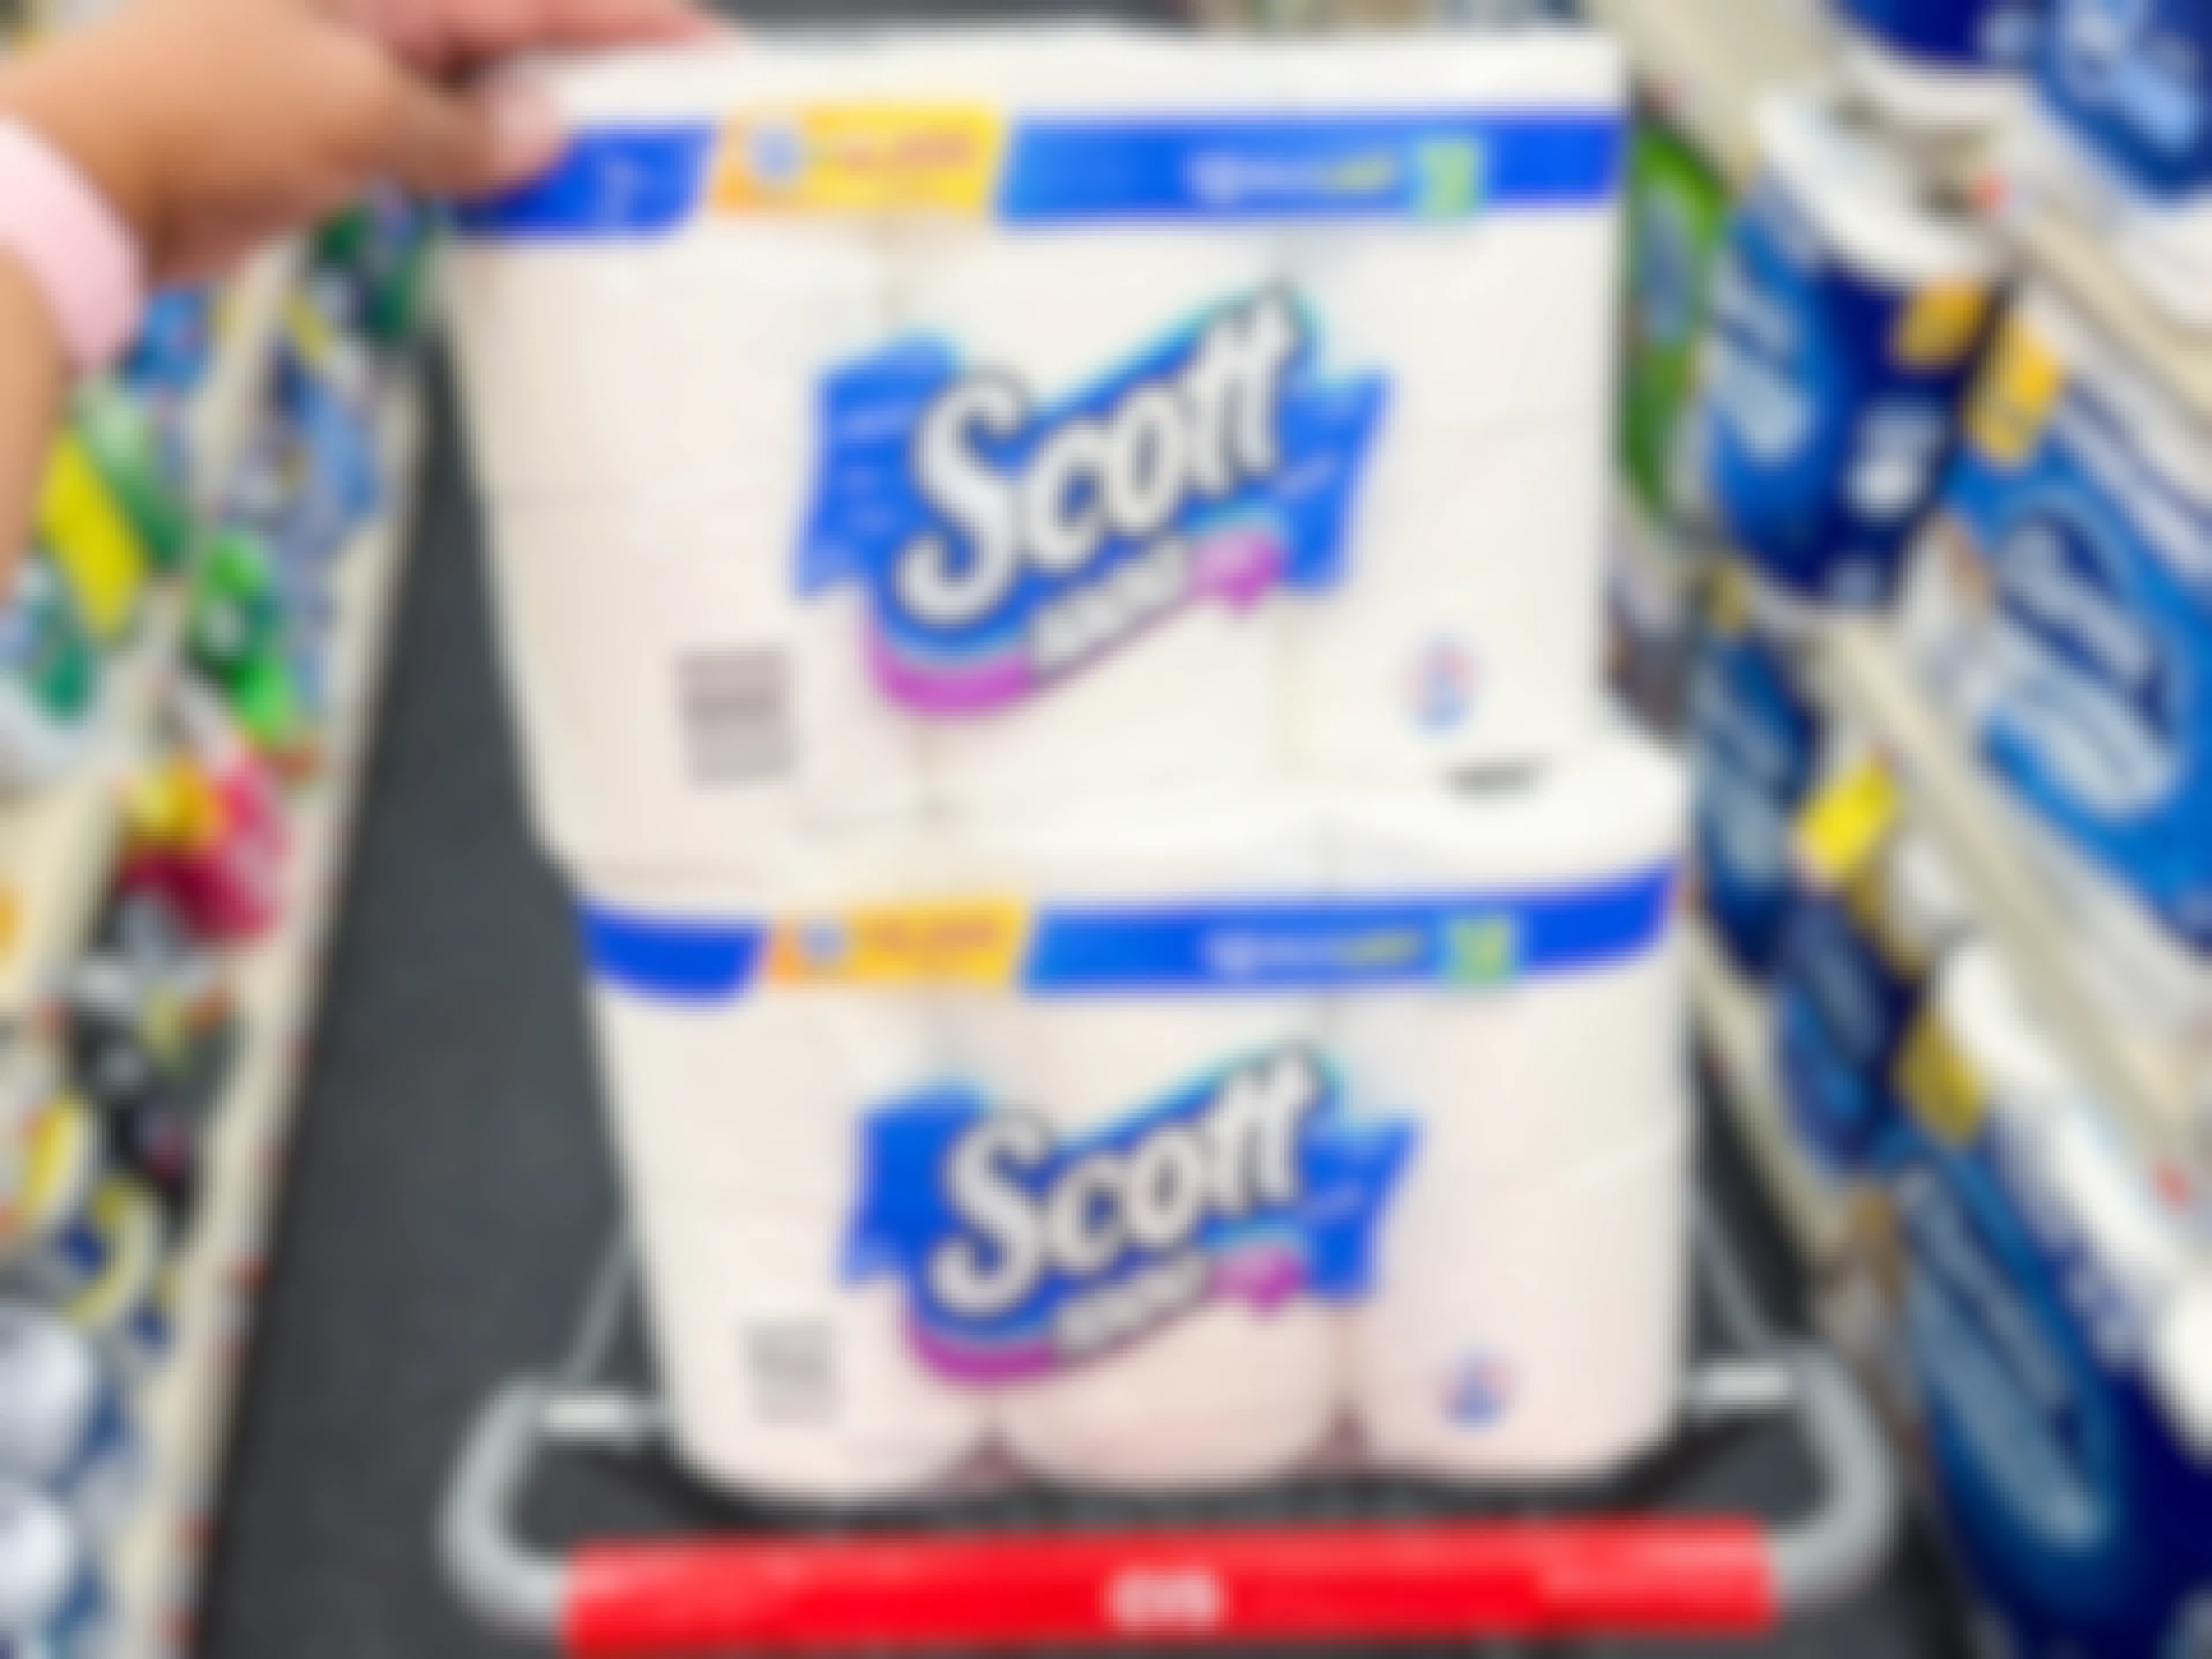 two packs of Scott toilet paper in shopping cart